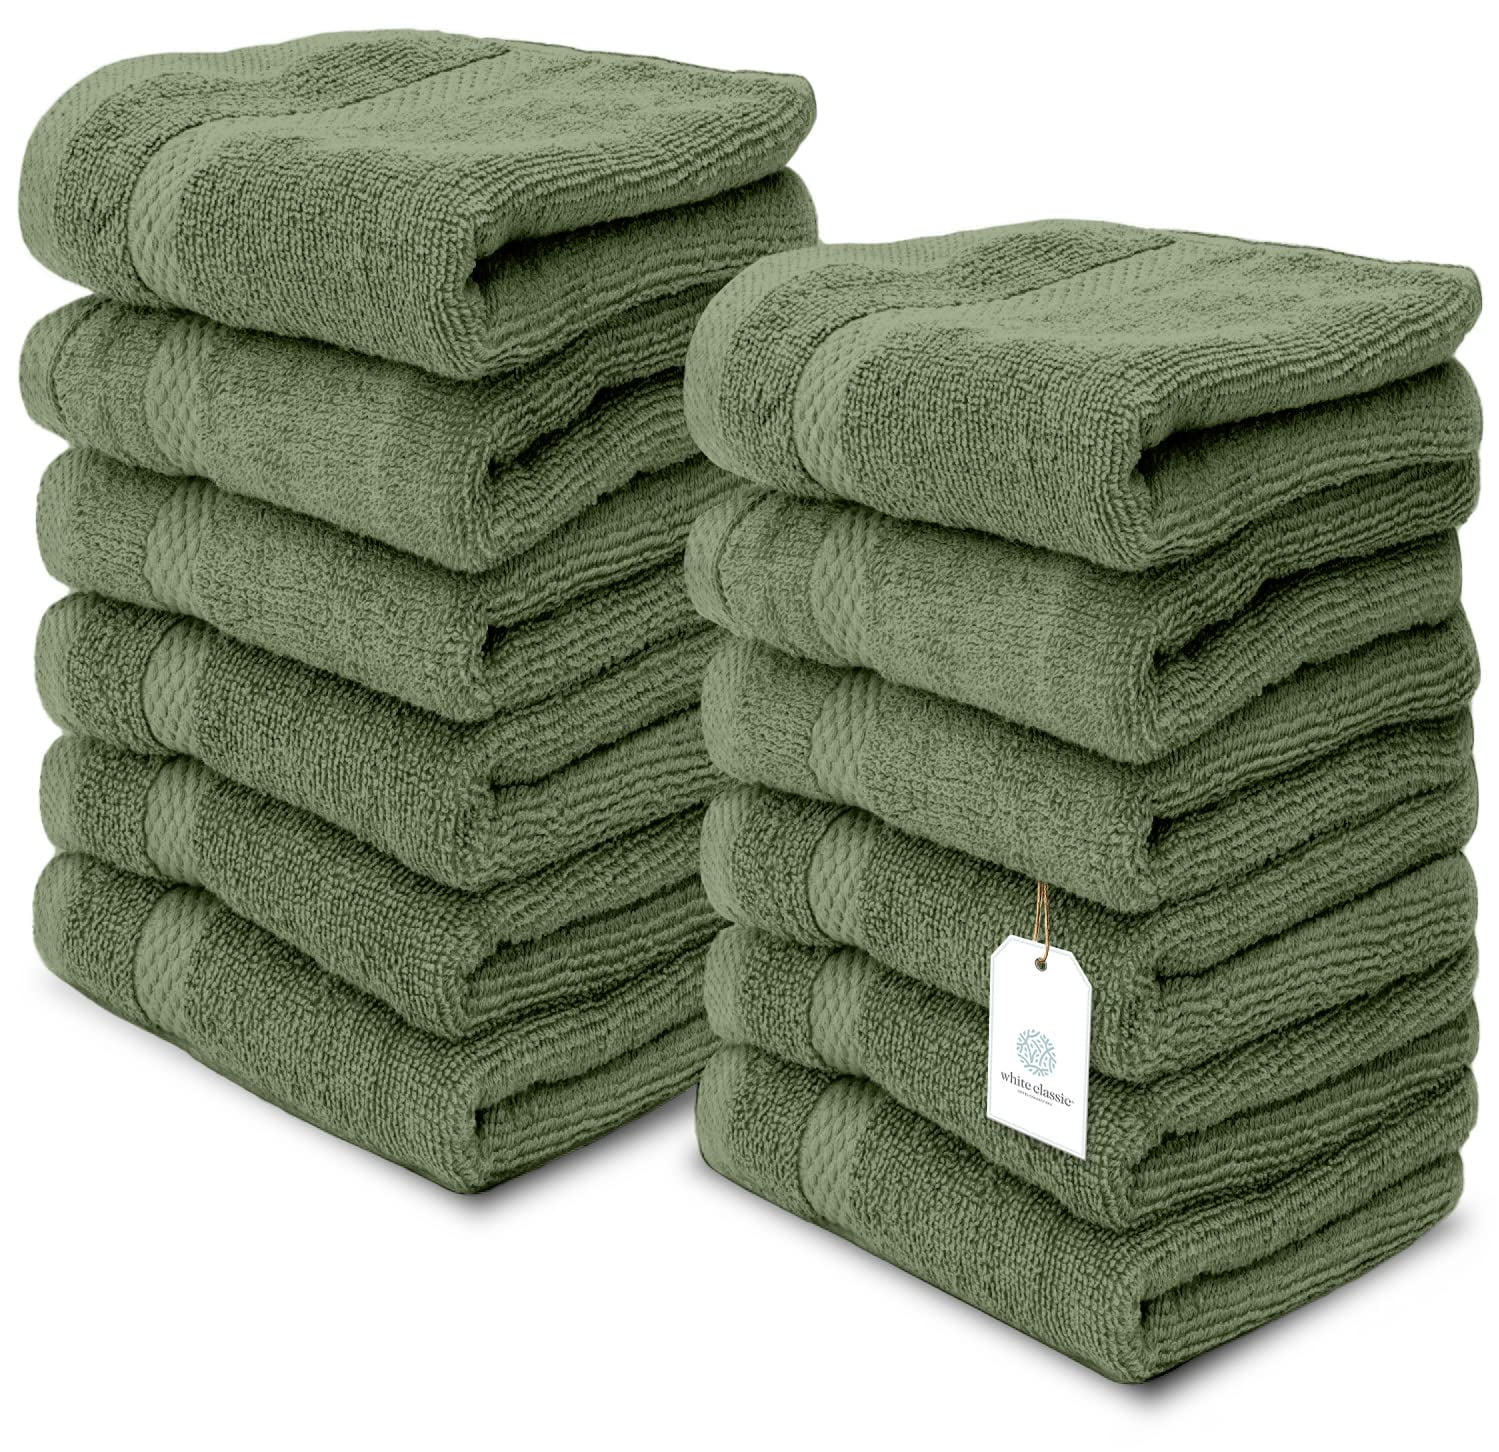 Washcloth - versatile, soft and absorbent - Mungo